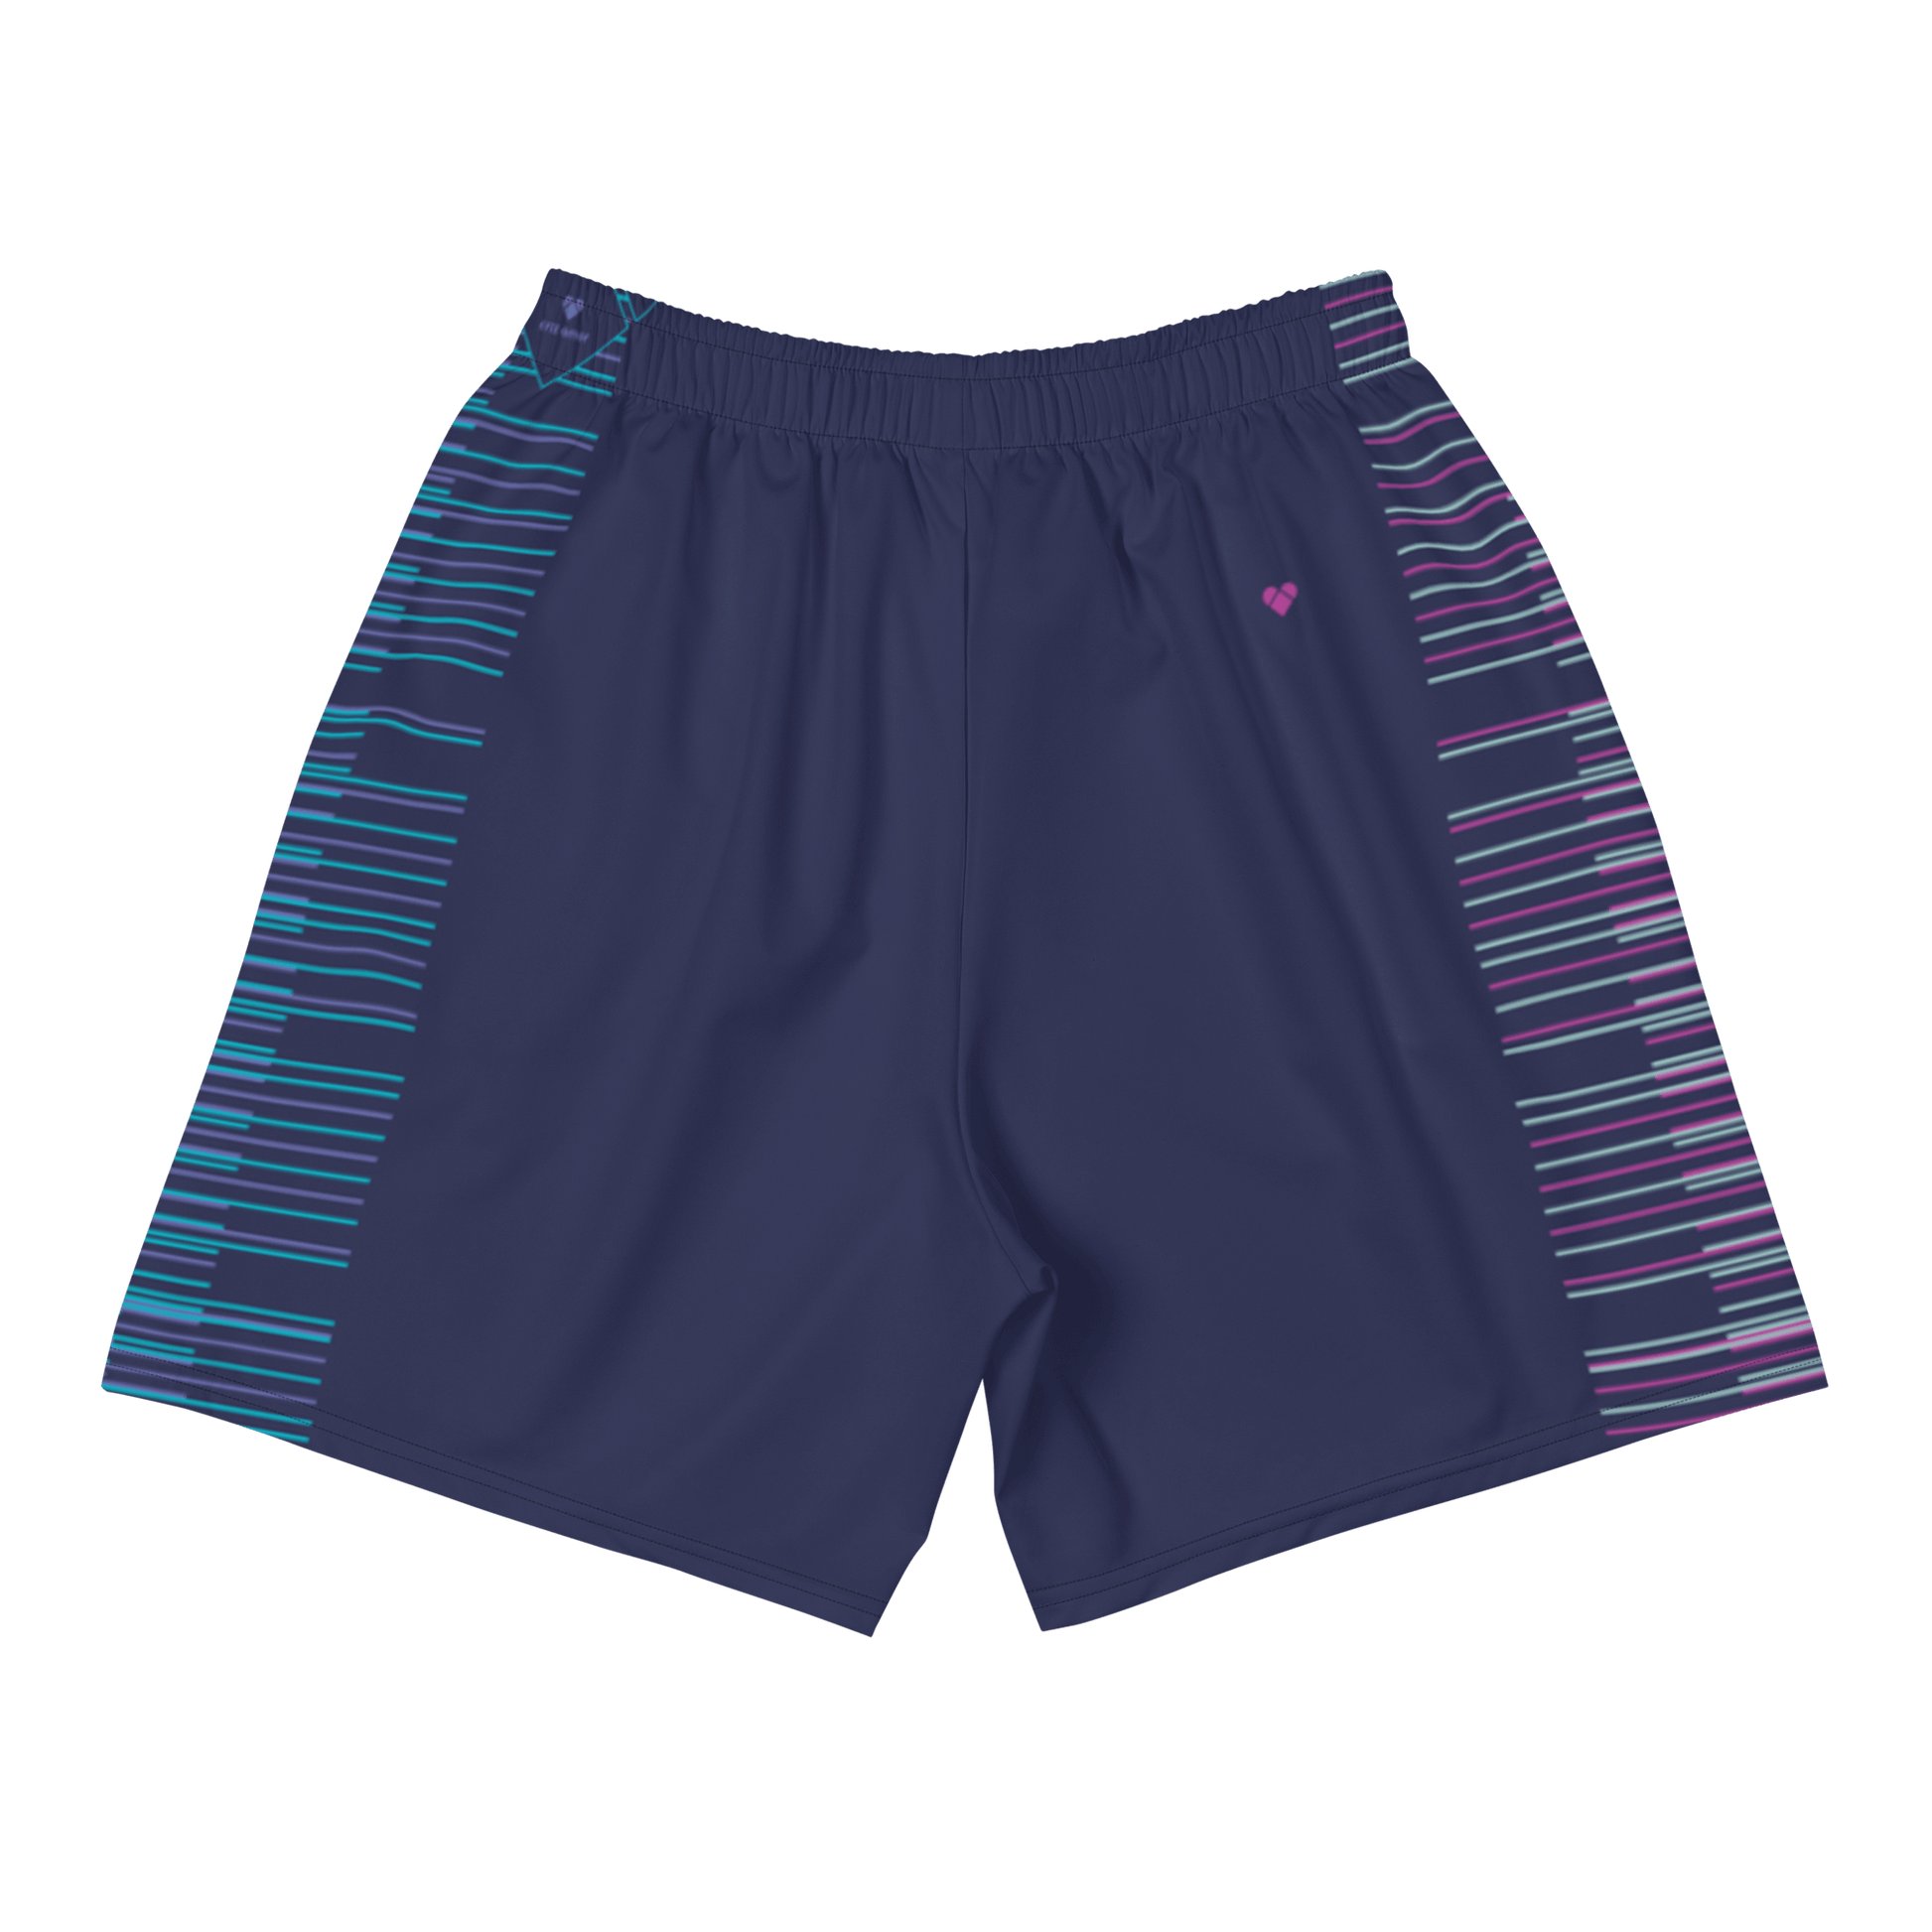 Vibrant gradient stripes adorn CRiZ AMOR's Dark Slate Blue Sport Shorts.